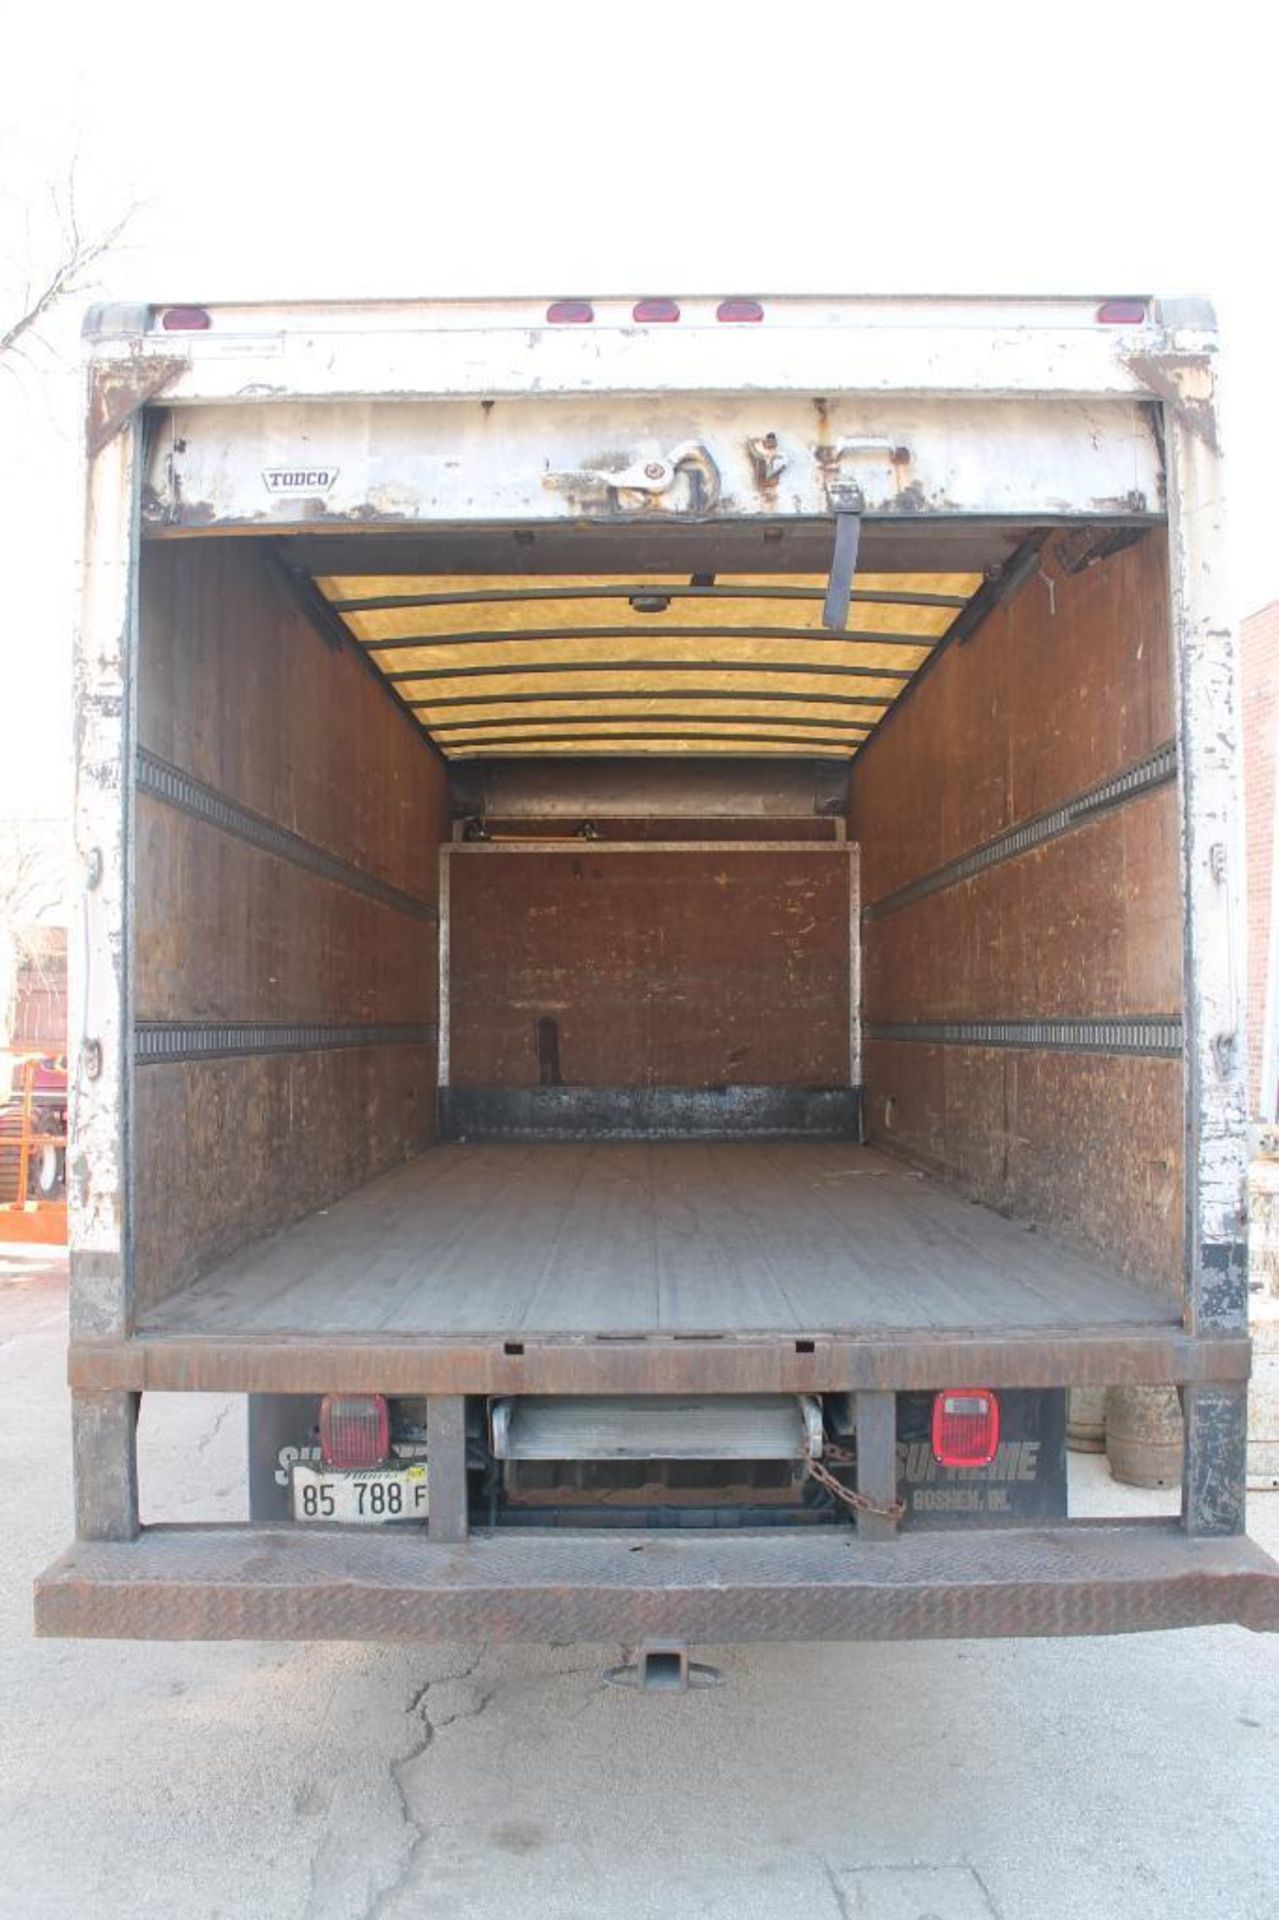 2007 Ford LCF 18 ft. Box Truck, VIN 3FRLL45Z57V431313, Diesel, Ramp - Image 7 of 8